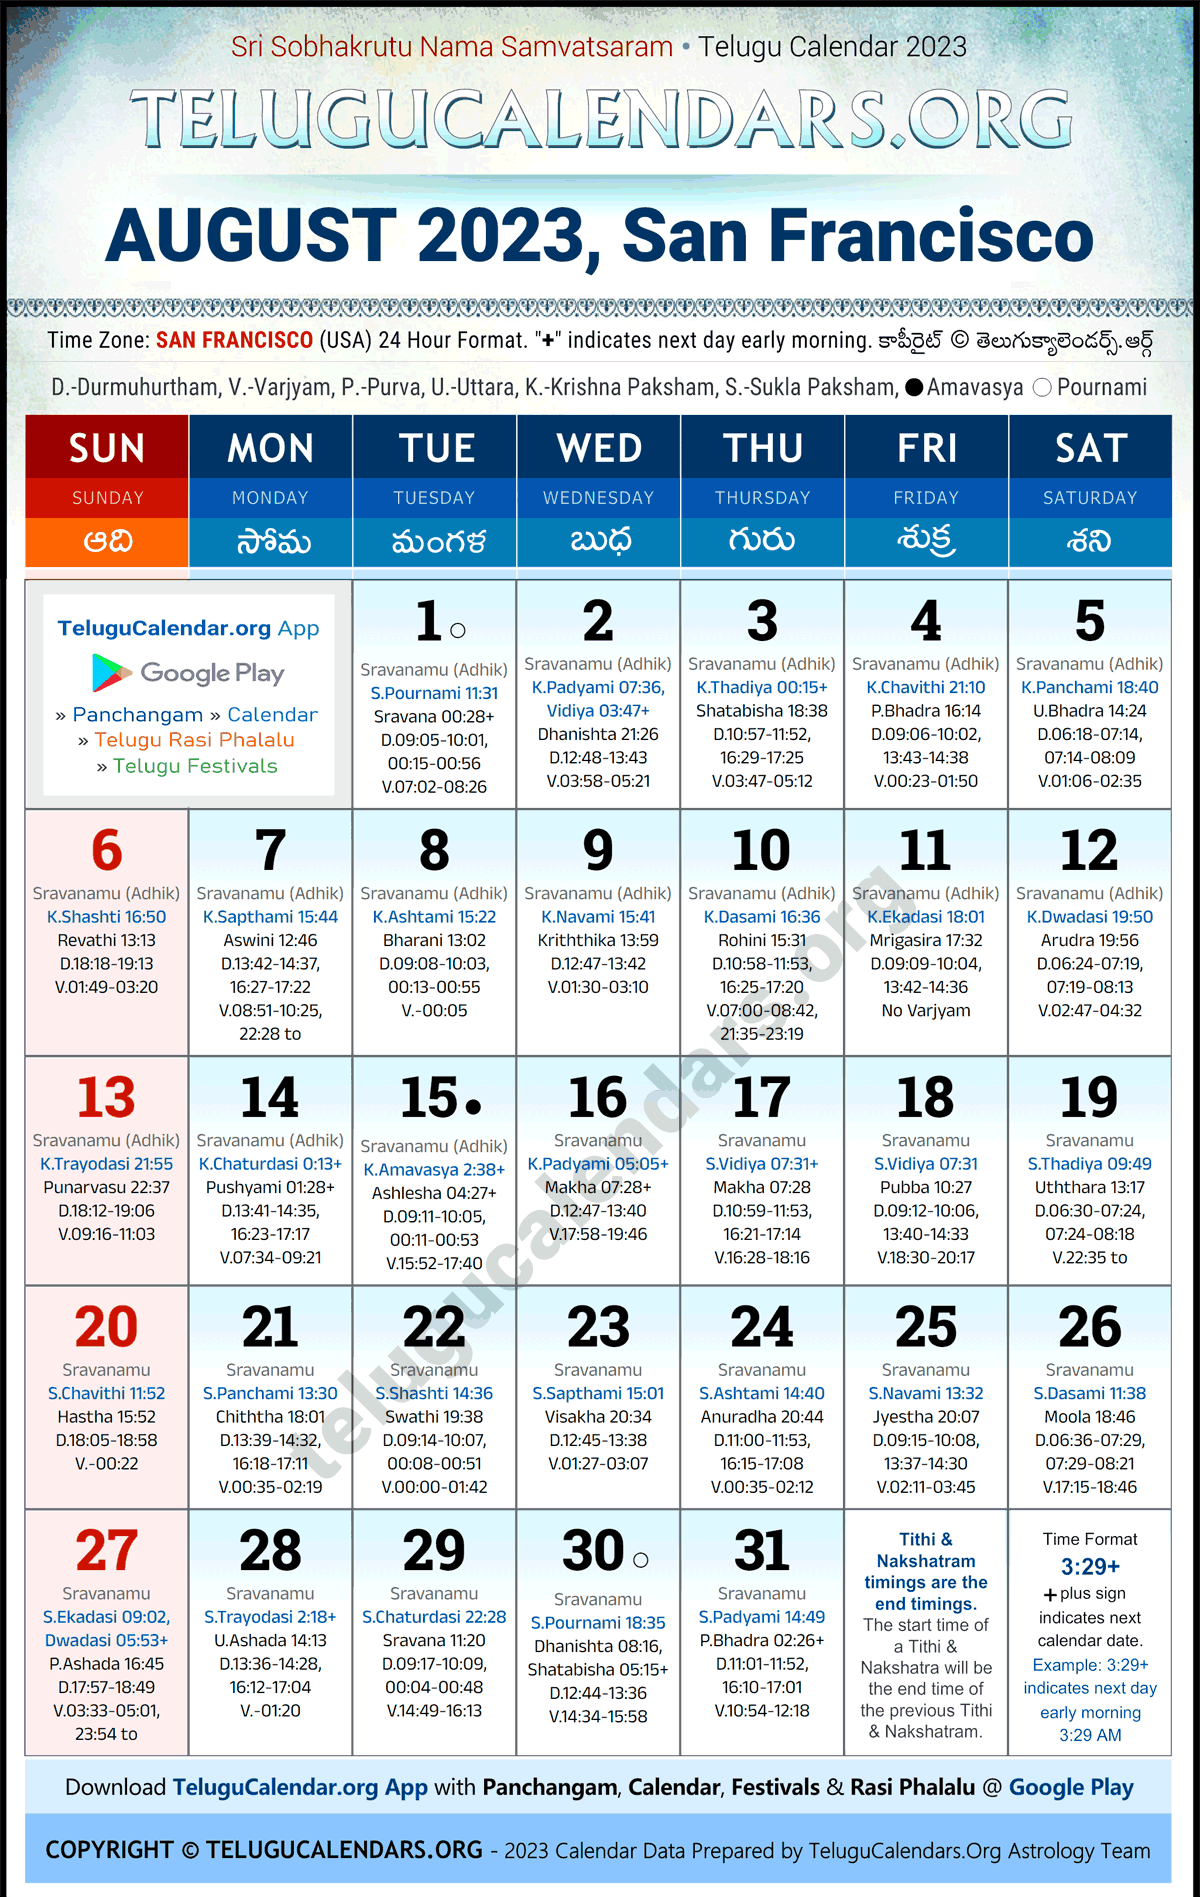 Telugu Calendar 2023 August Festivals for San Francisco